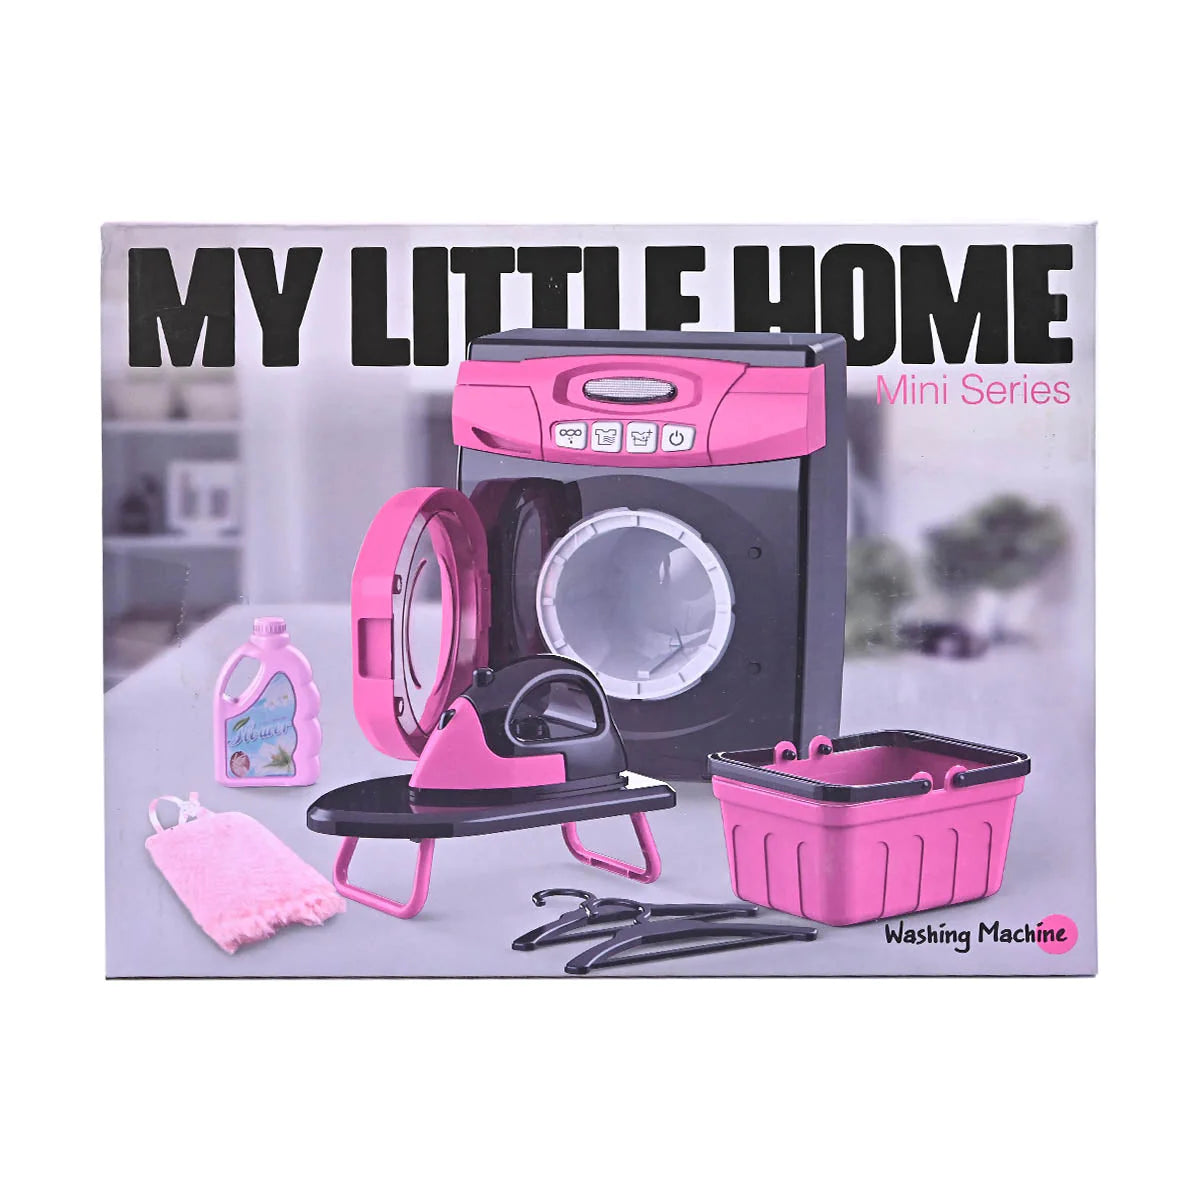 My Little Home Washing Machine Play Set